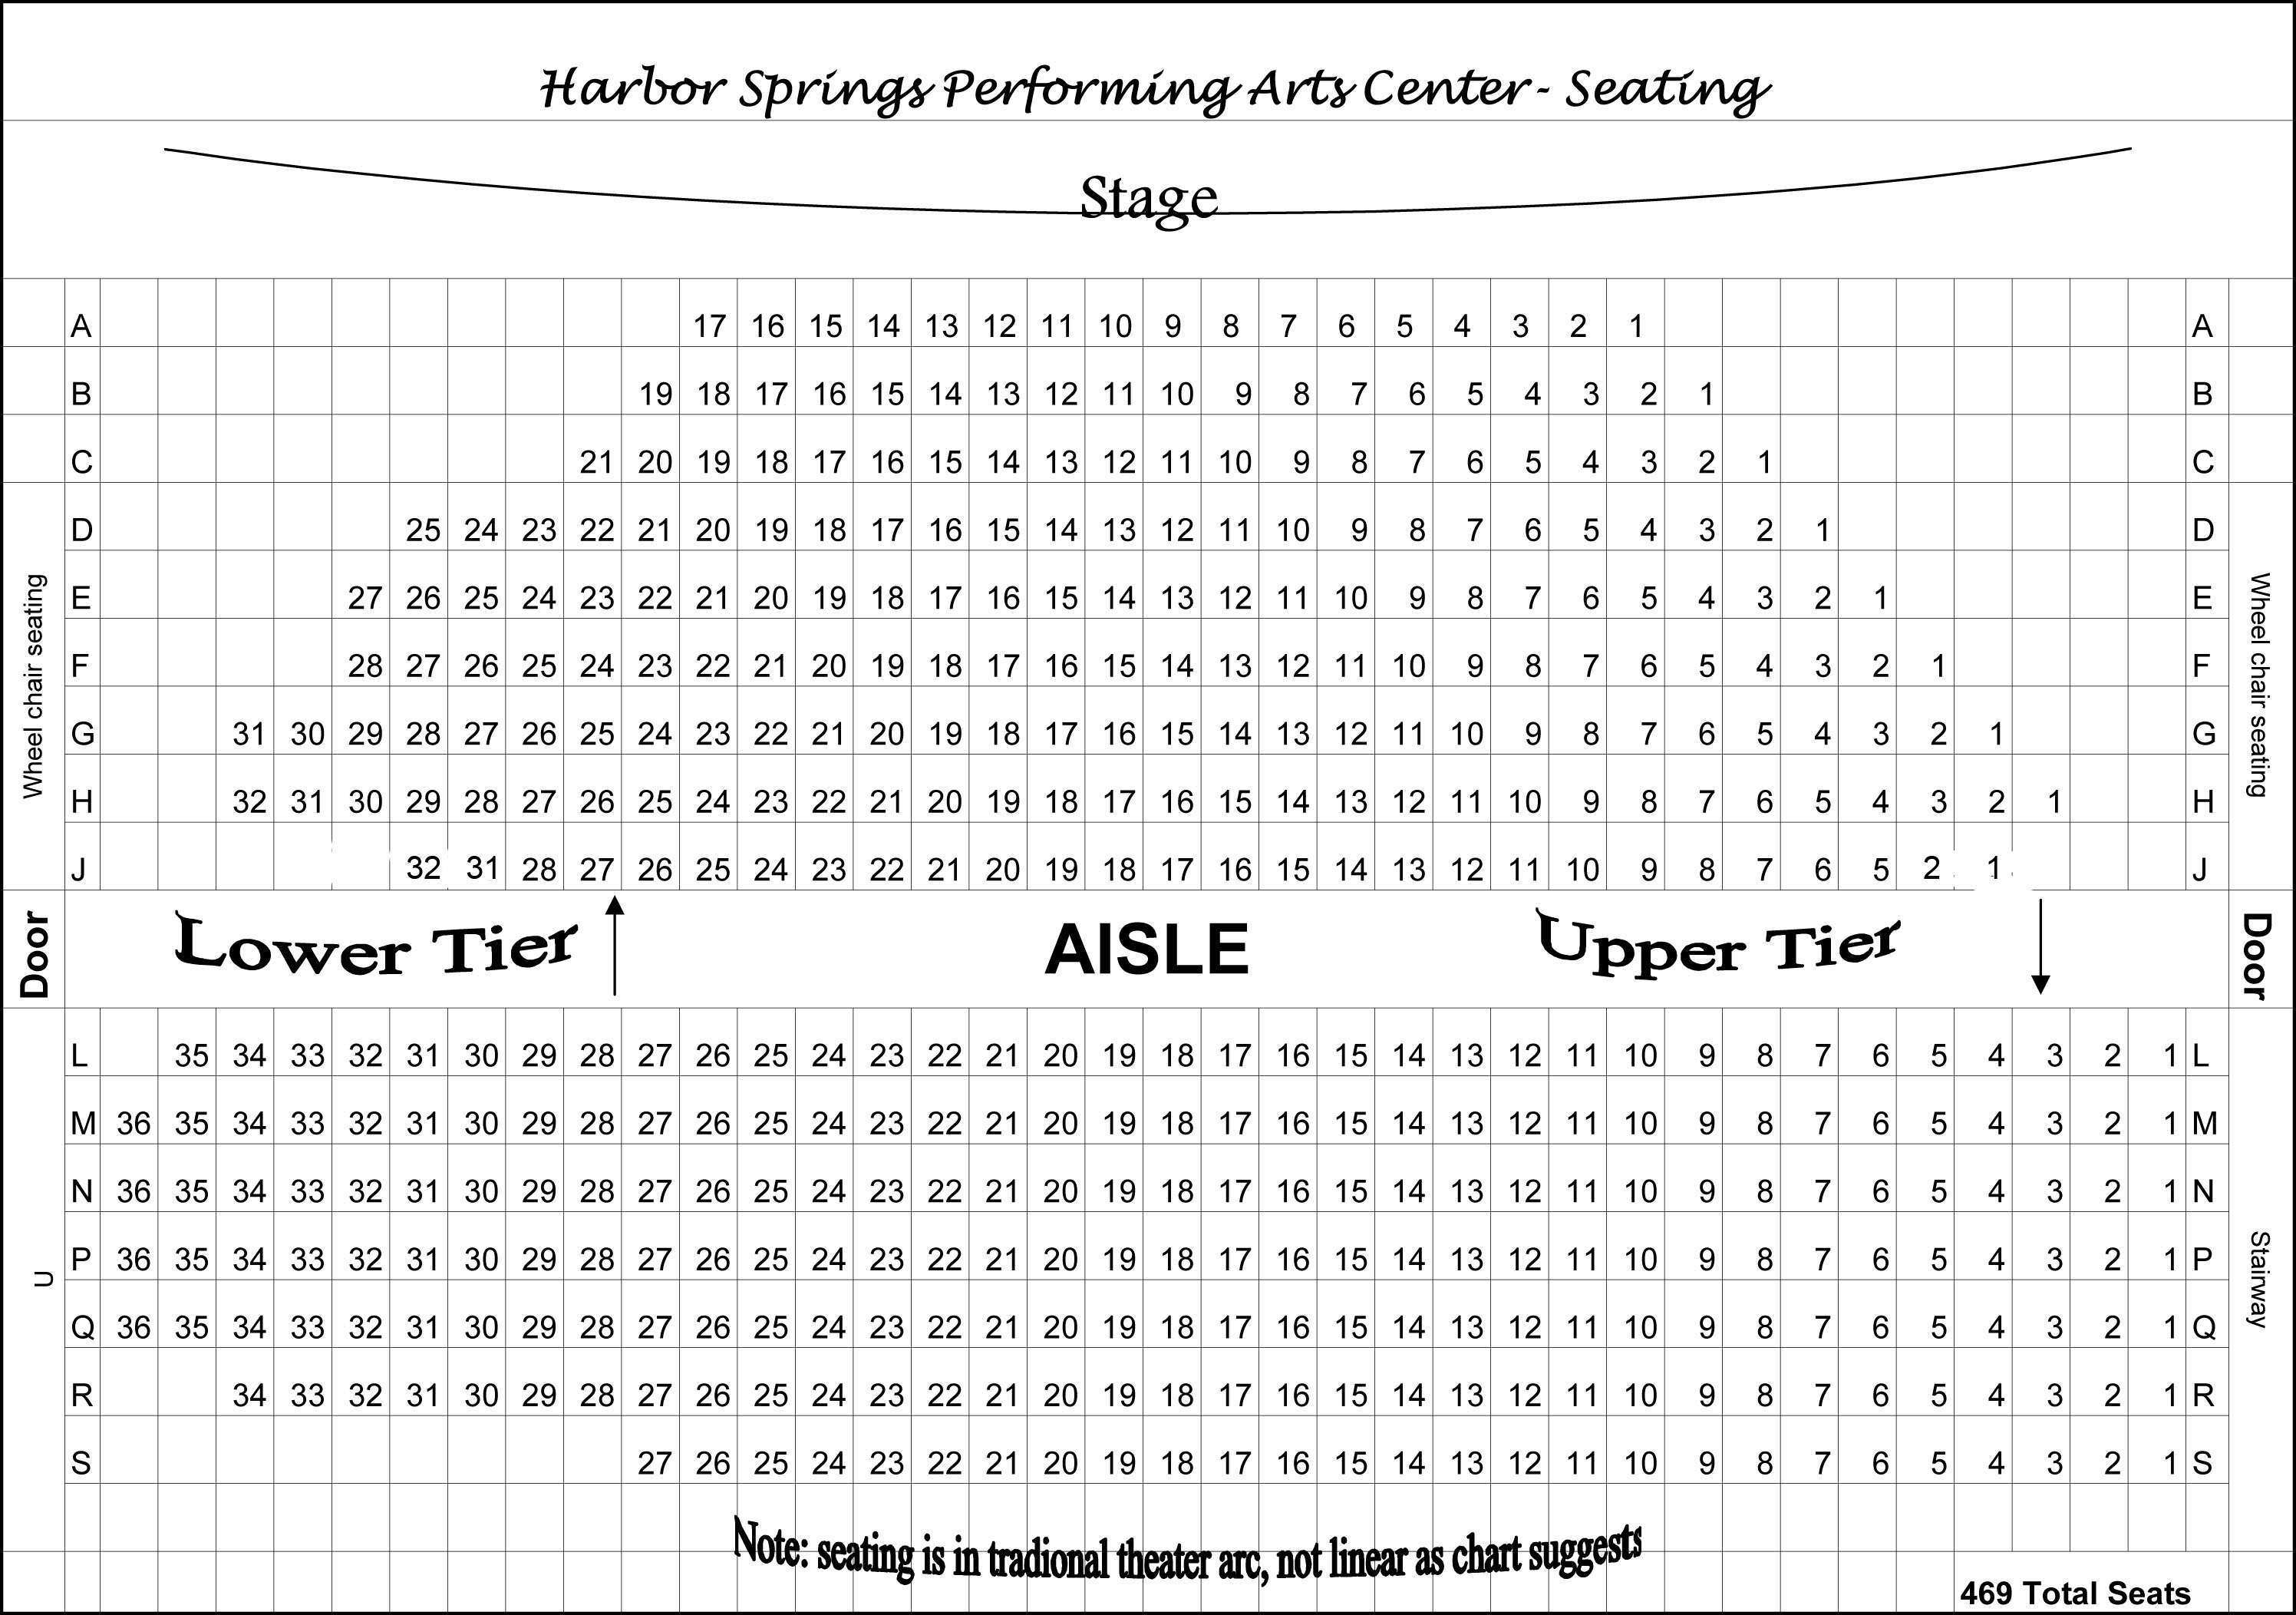 HSPAC seating chart